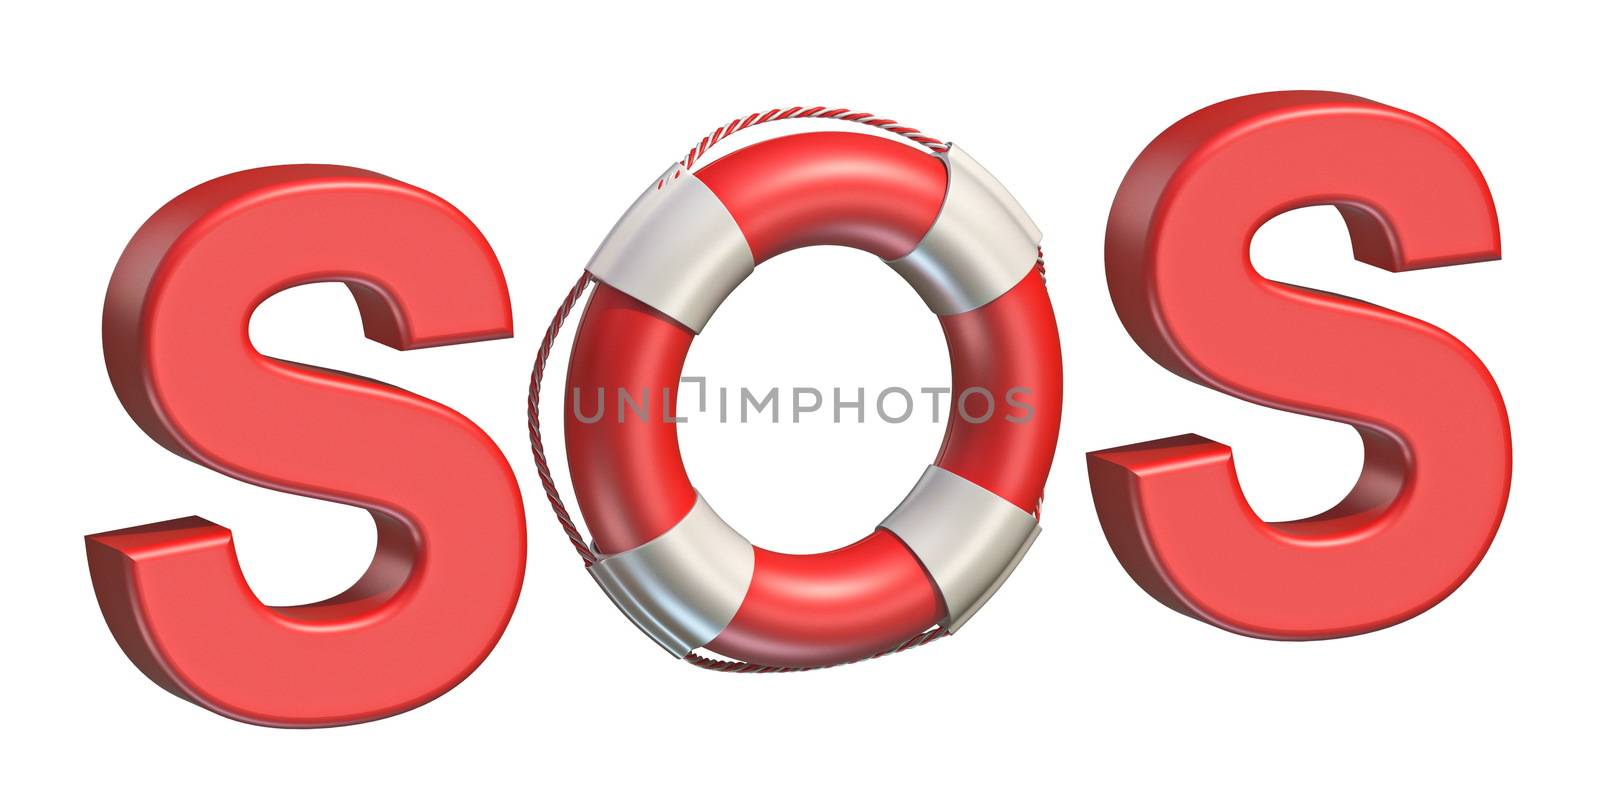 Lifebuoy SOS sign 3D render illustration isolated on white background